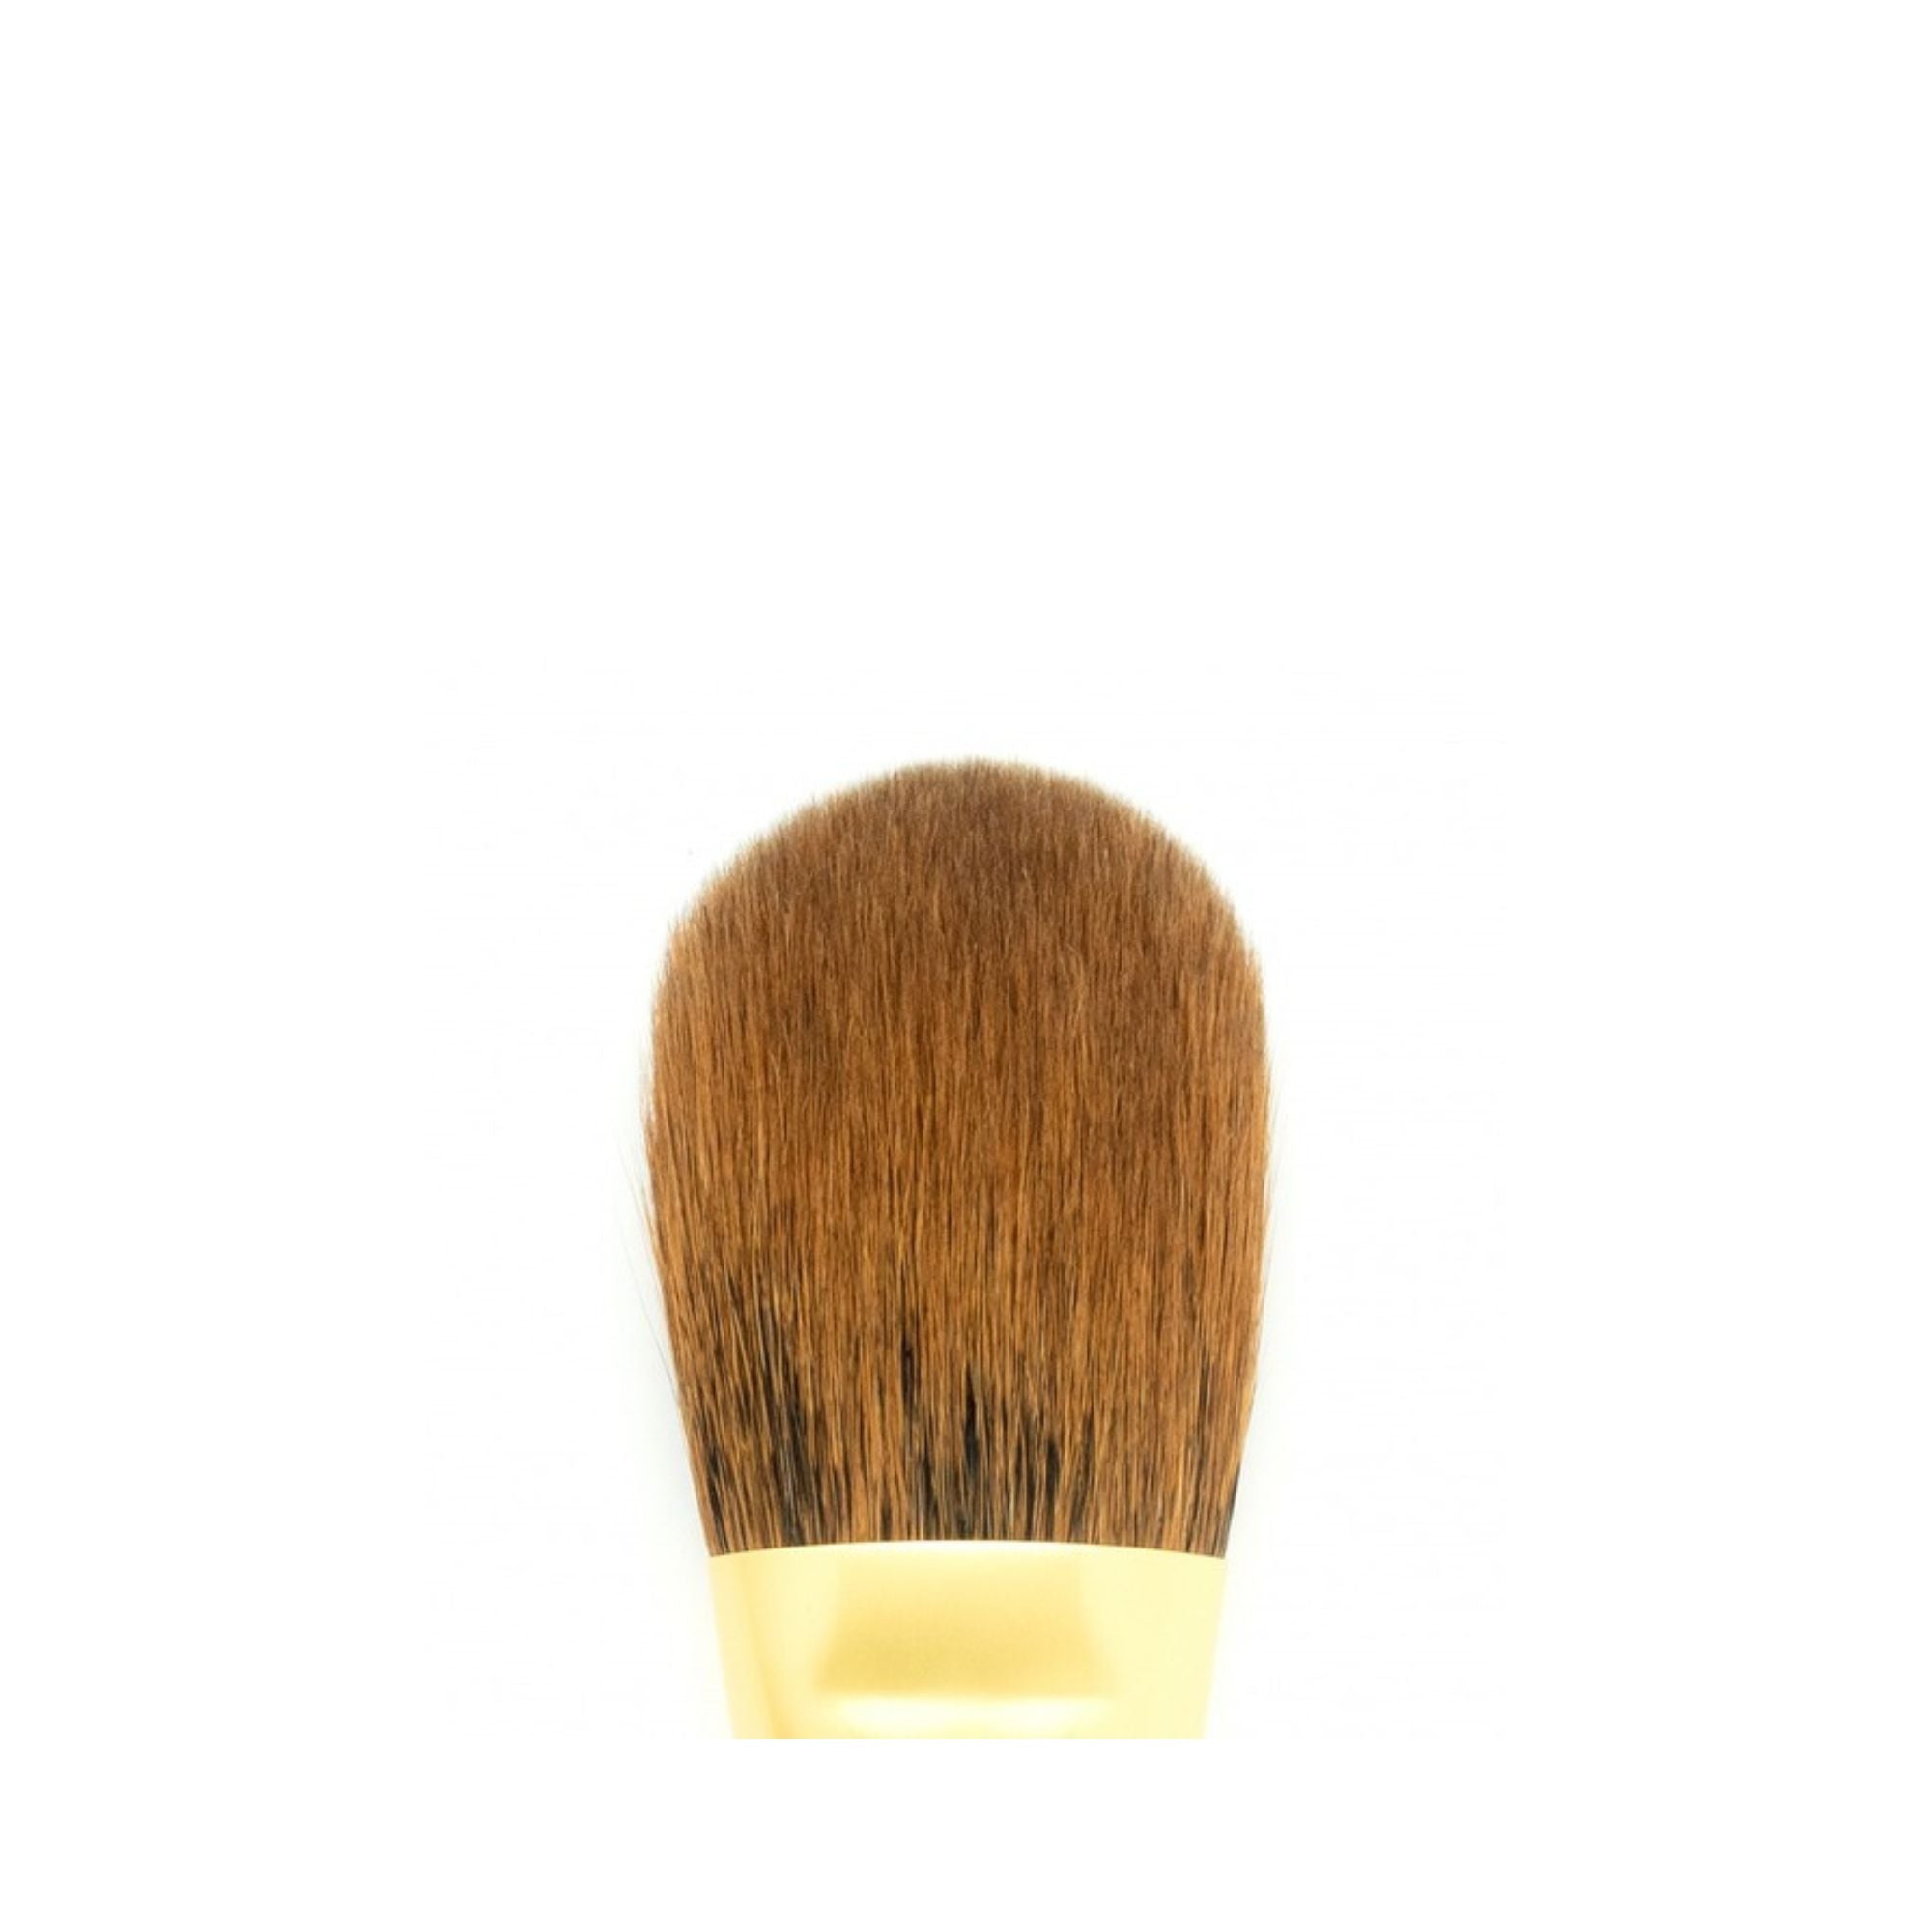 Koyudo RCS Small Powder Brush, Sakura Makie Design - Fude Beauty, Japanese Makeup Brushes